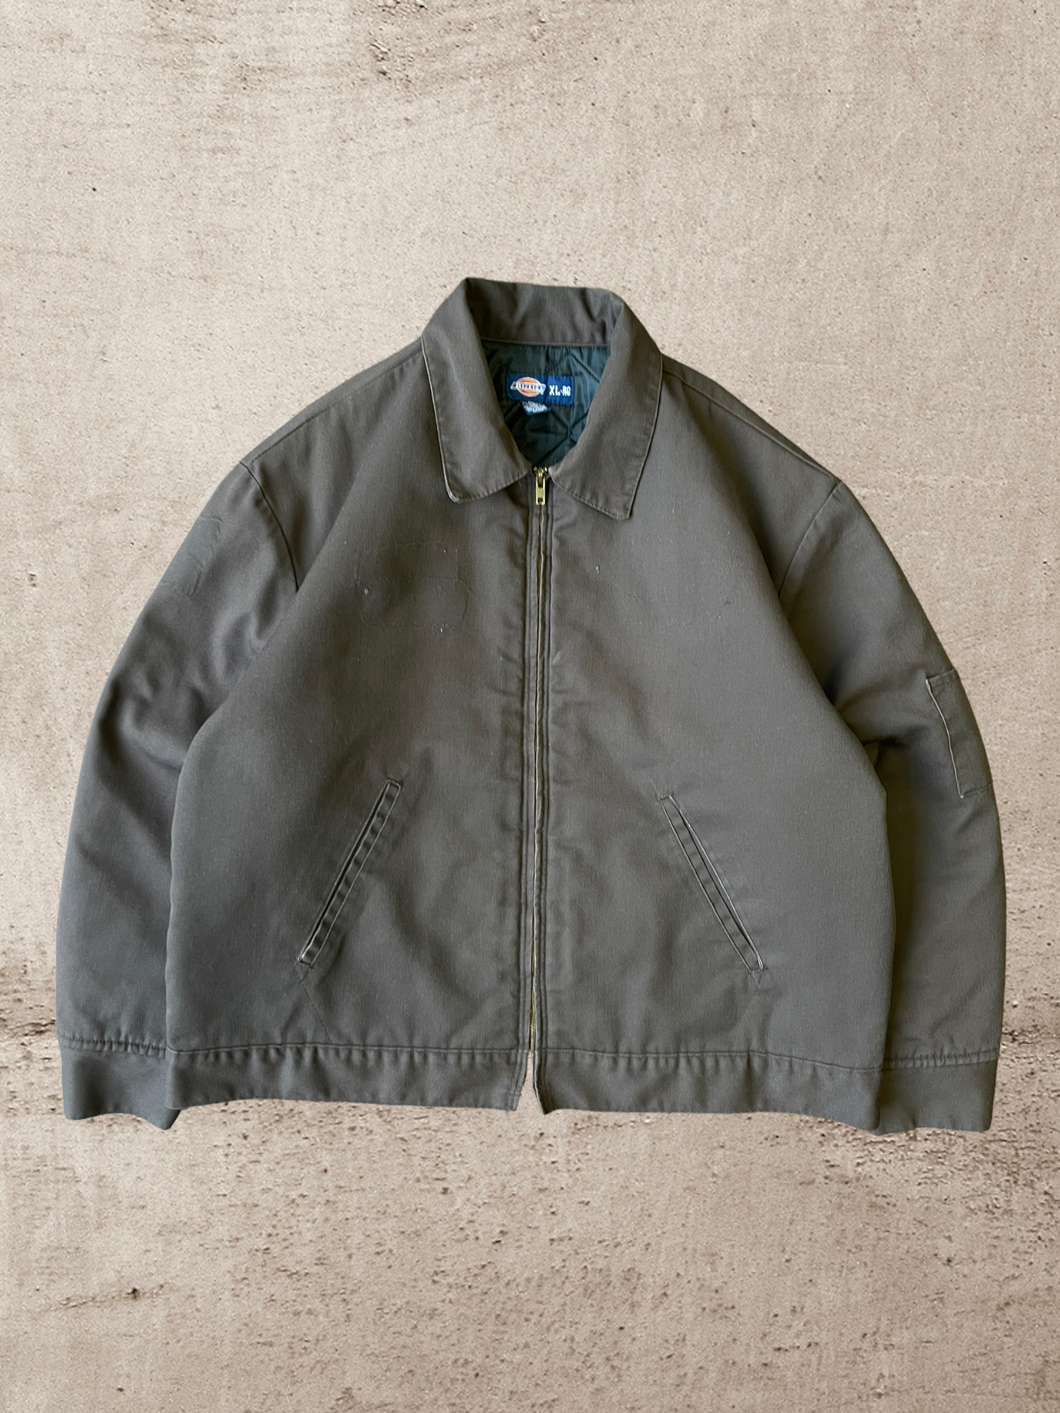 Vintage Dickies Quilted Lined Eisenhower Jacket - XL